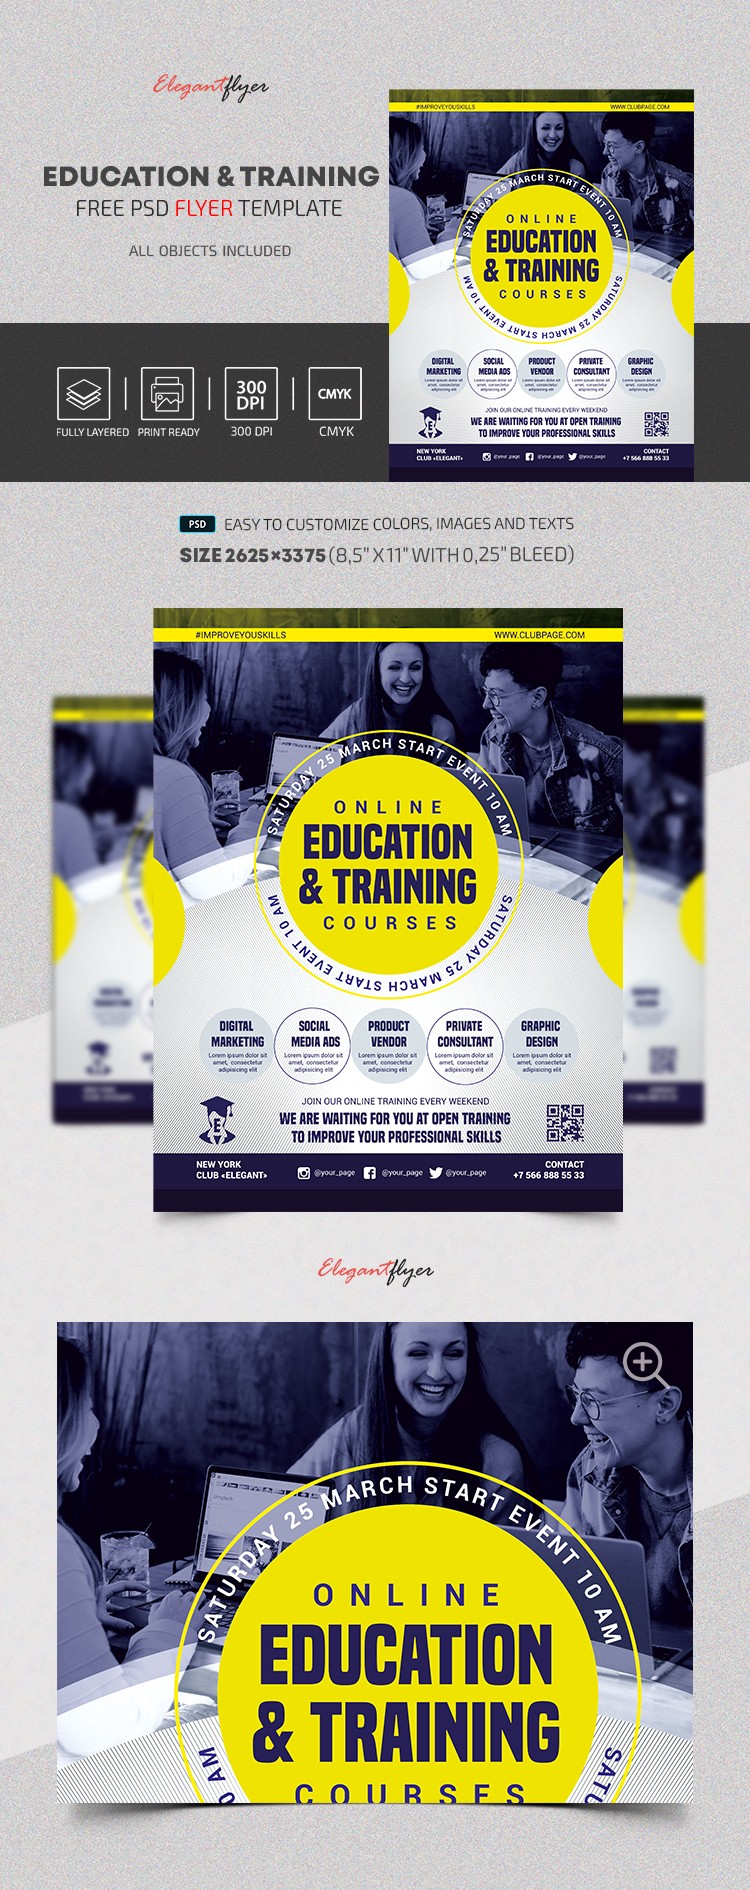 Education & Training by ElegantFlyer